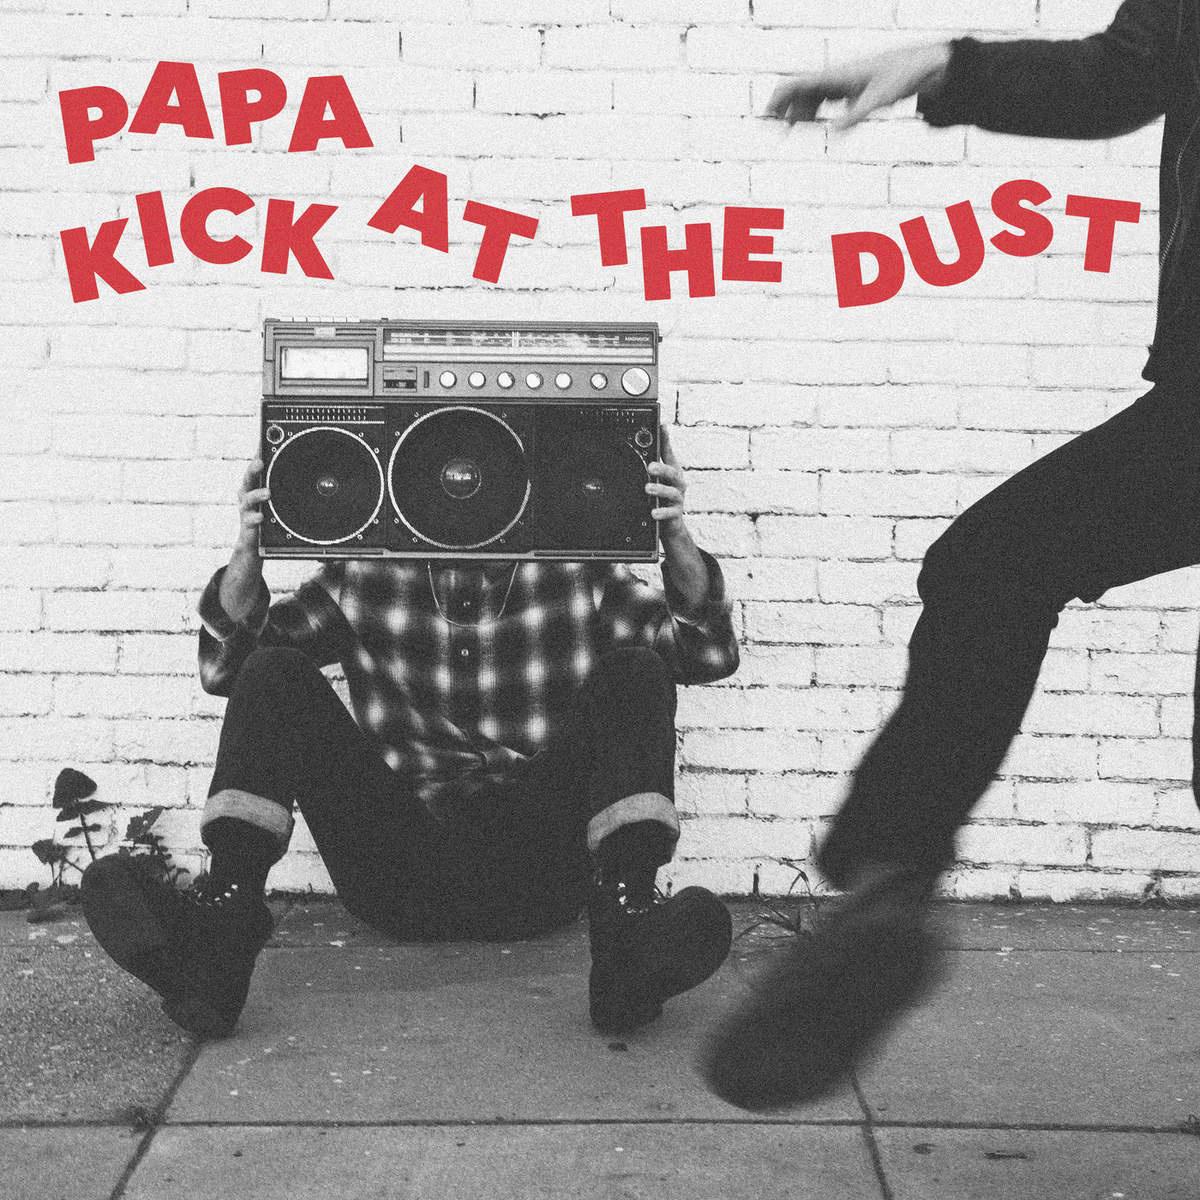 Kick at the Dust